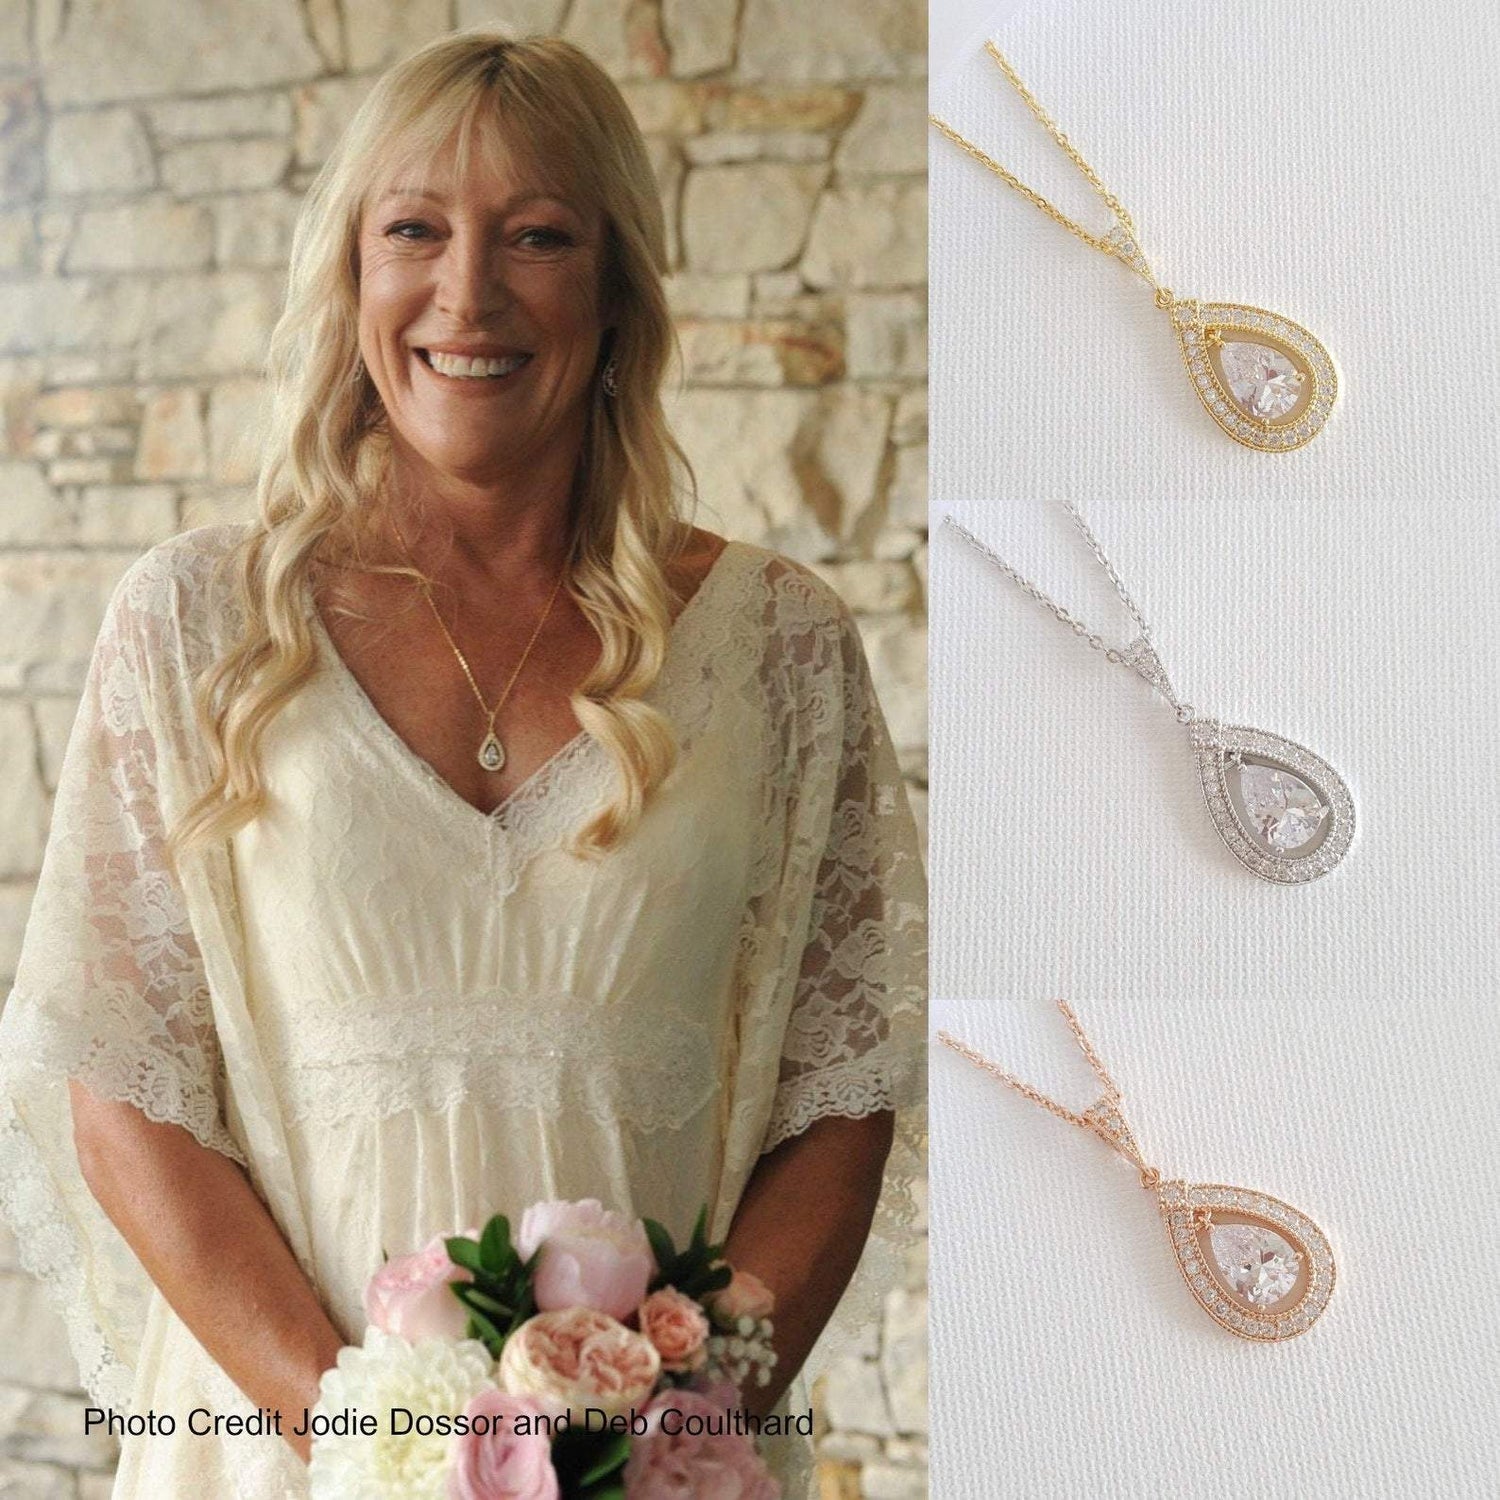 Gold Bridal Pendant Necklace Made of Teardrop Cubic Zirconia- Sarah - PoetryDesigns